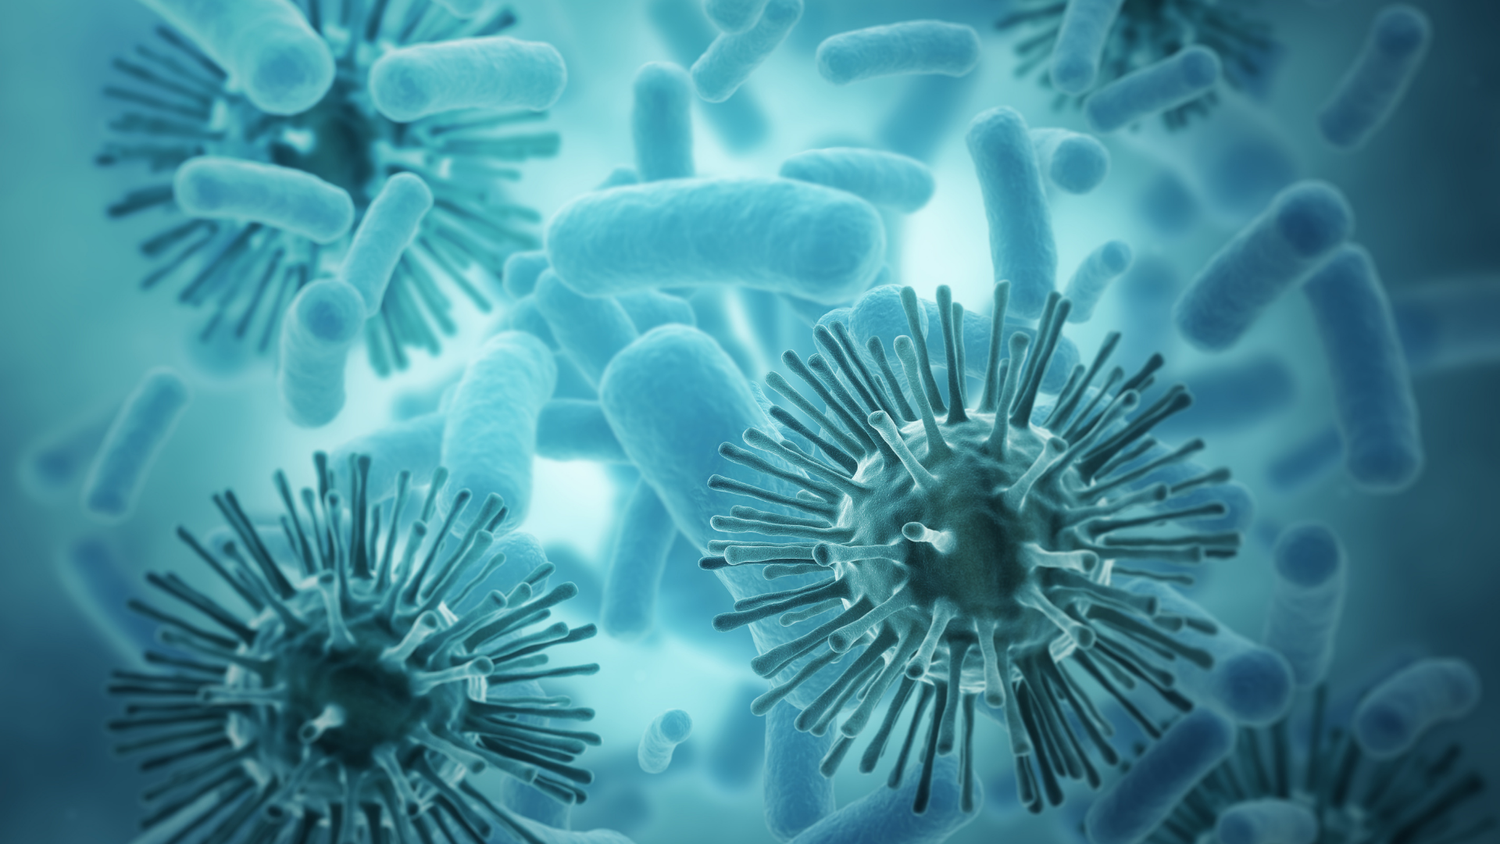 Morion - Killing viruses and bacteria